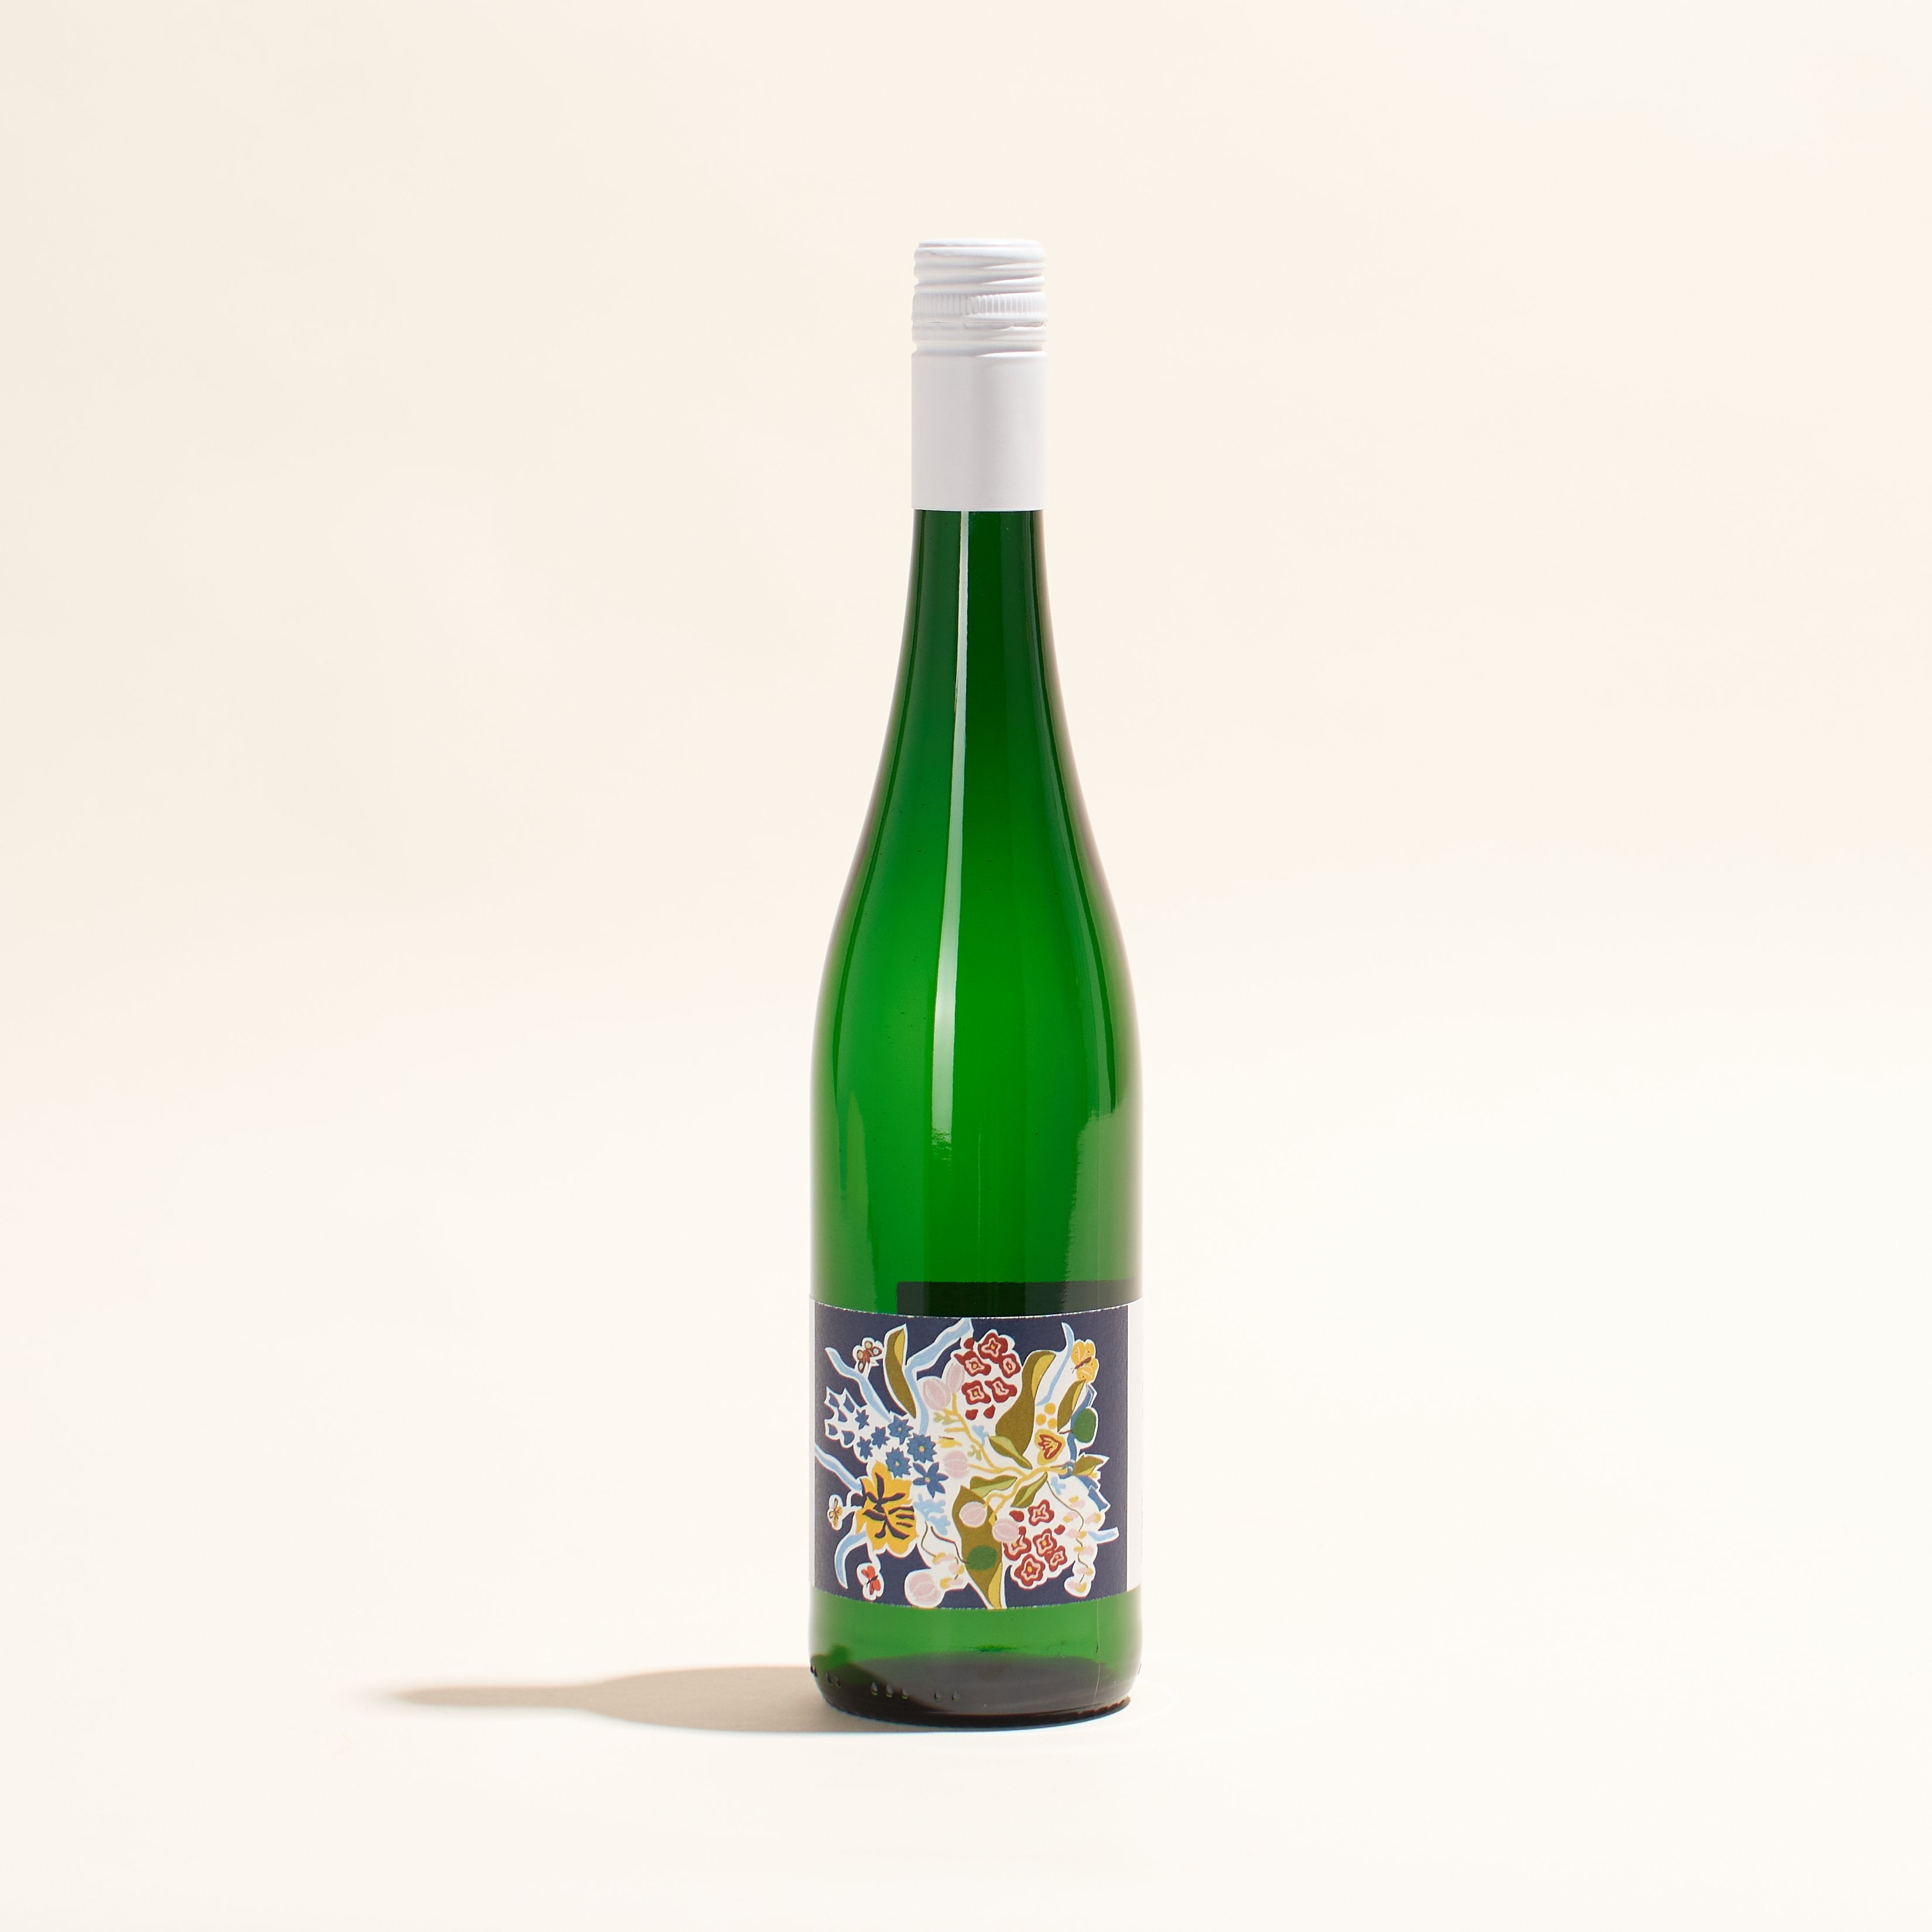 weissburgunder trocken weingut seehof natural White wine Rheinhessen Germany front label 768320b2 31d0 463e a0f4 ea256066f549